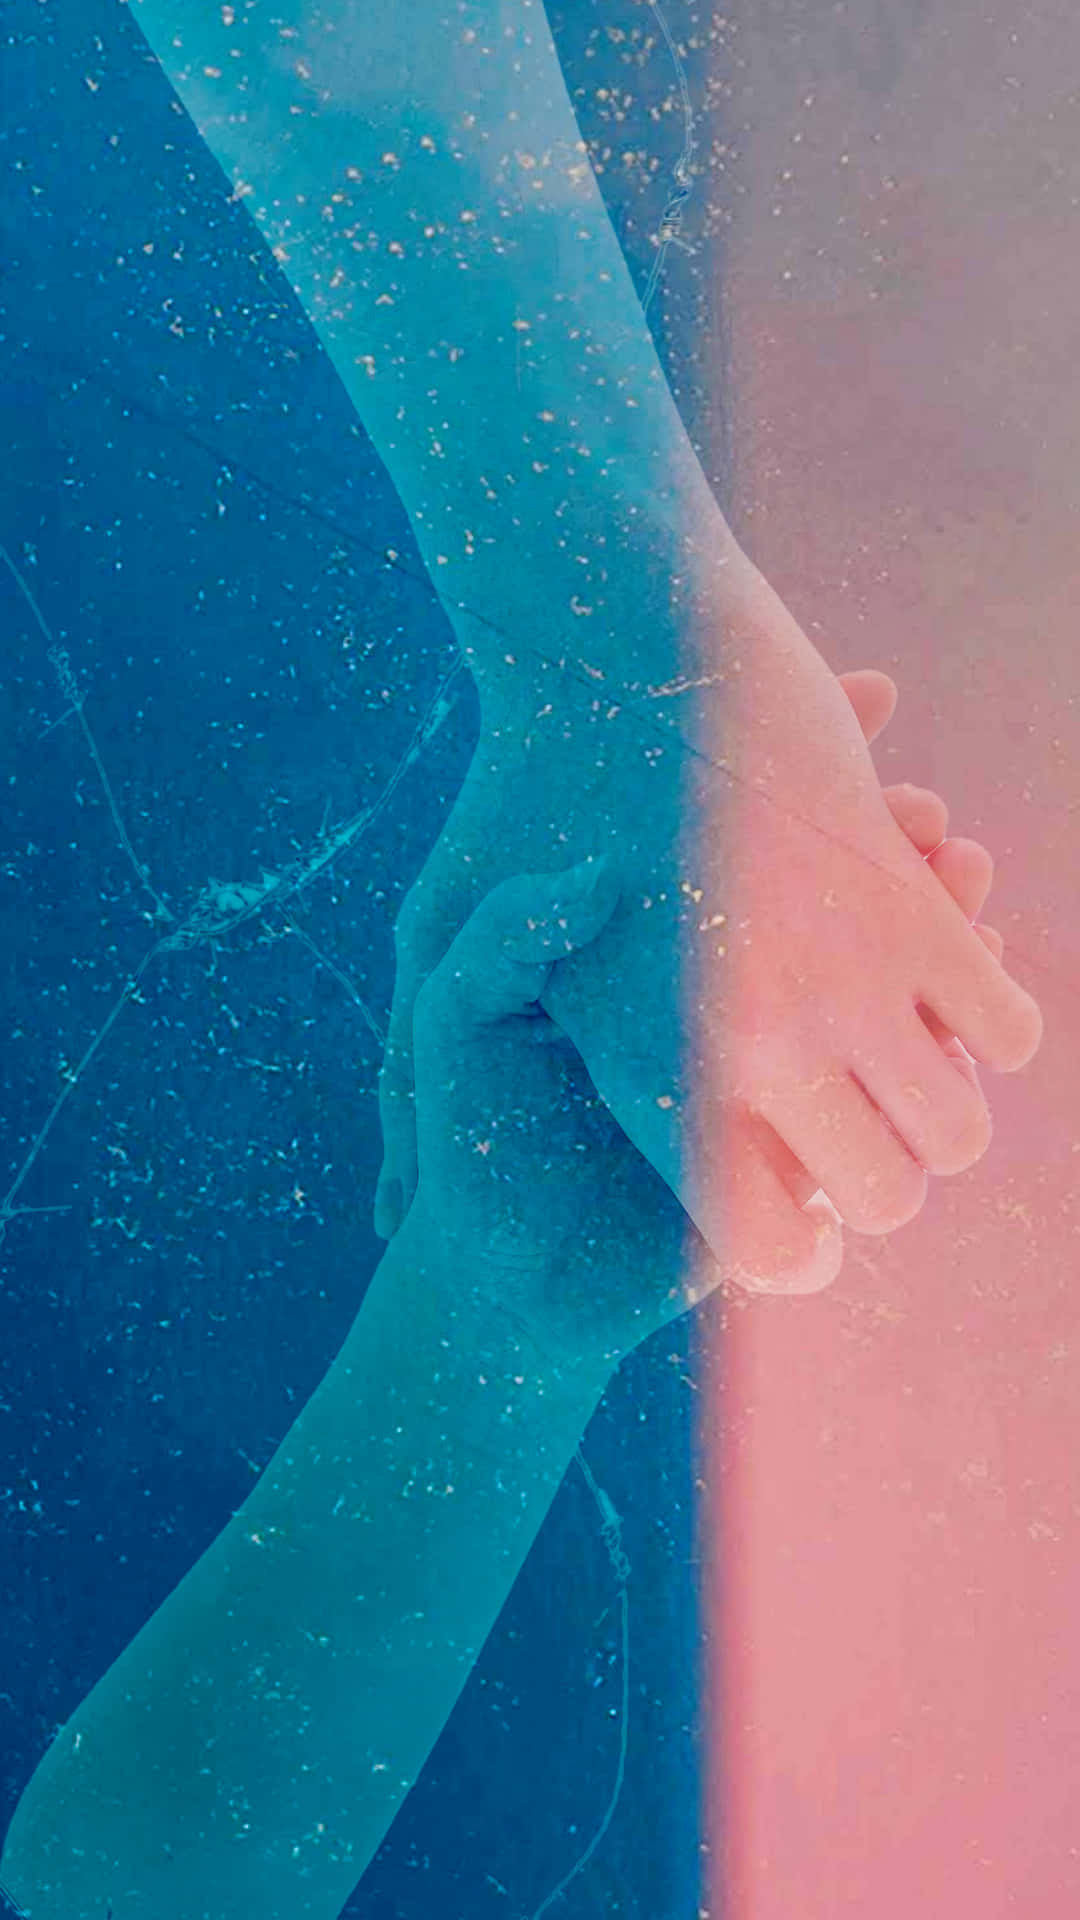 Blue And Pink Textured Handshake Background